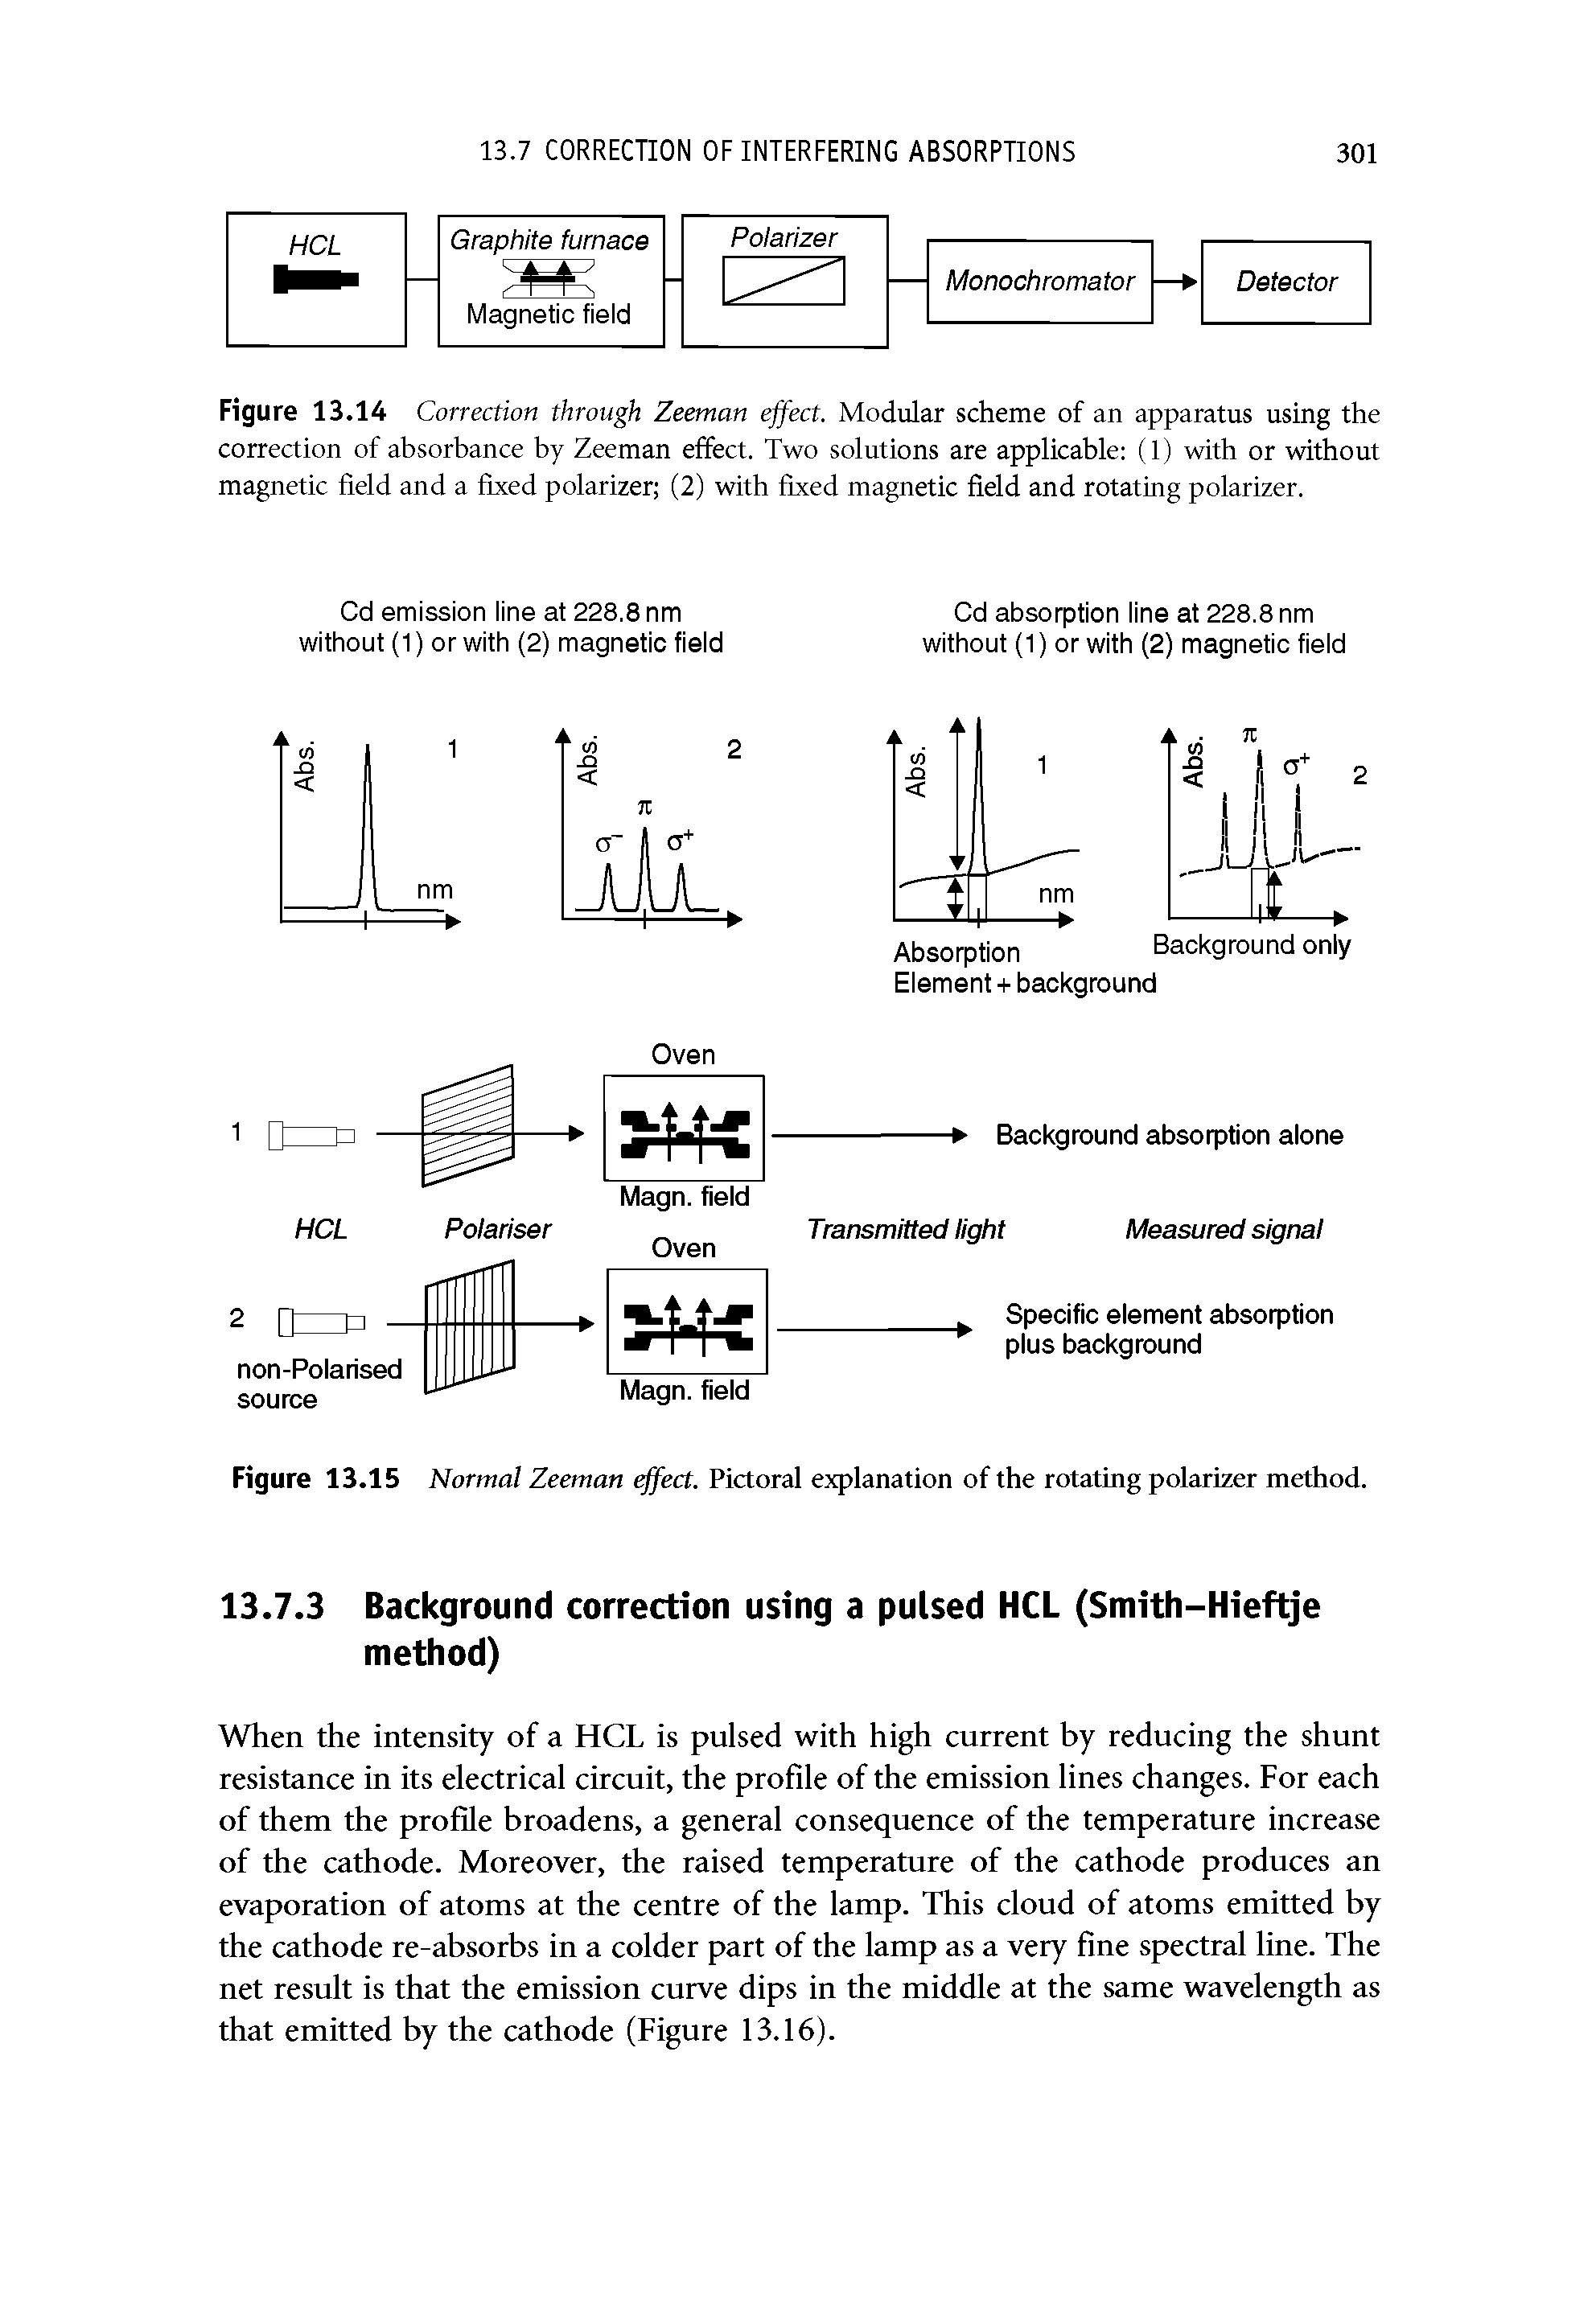 Figure 13.15 Normal Zeeman effect. Pictoral explanation of the rotating polarizer method.